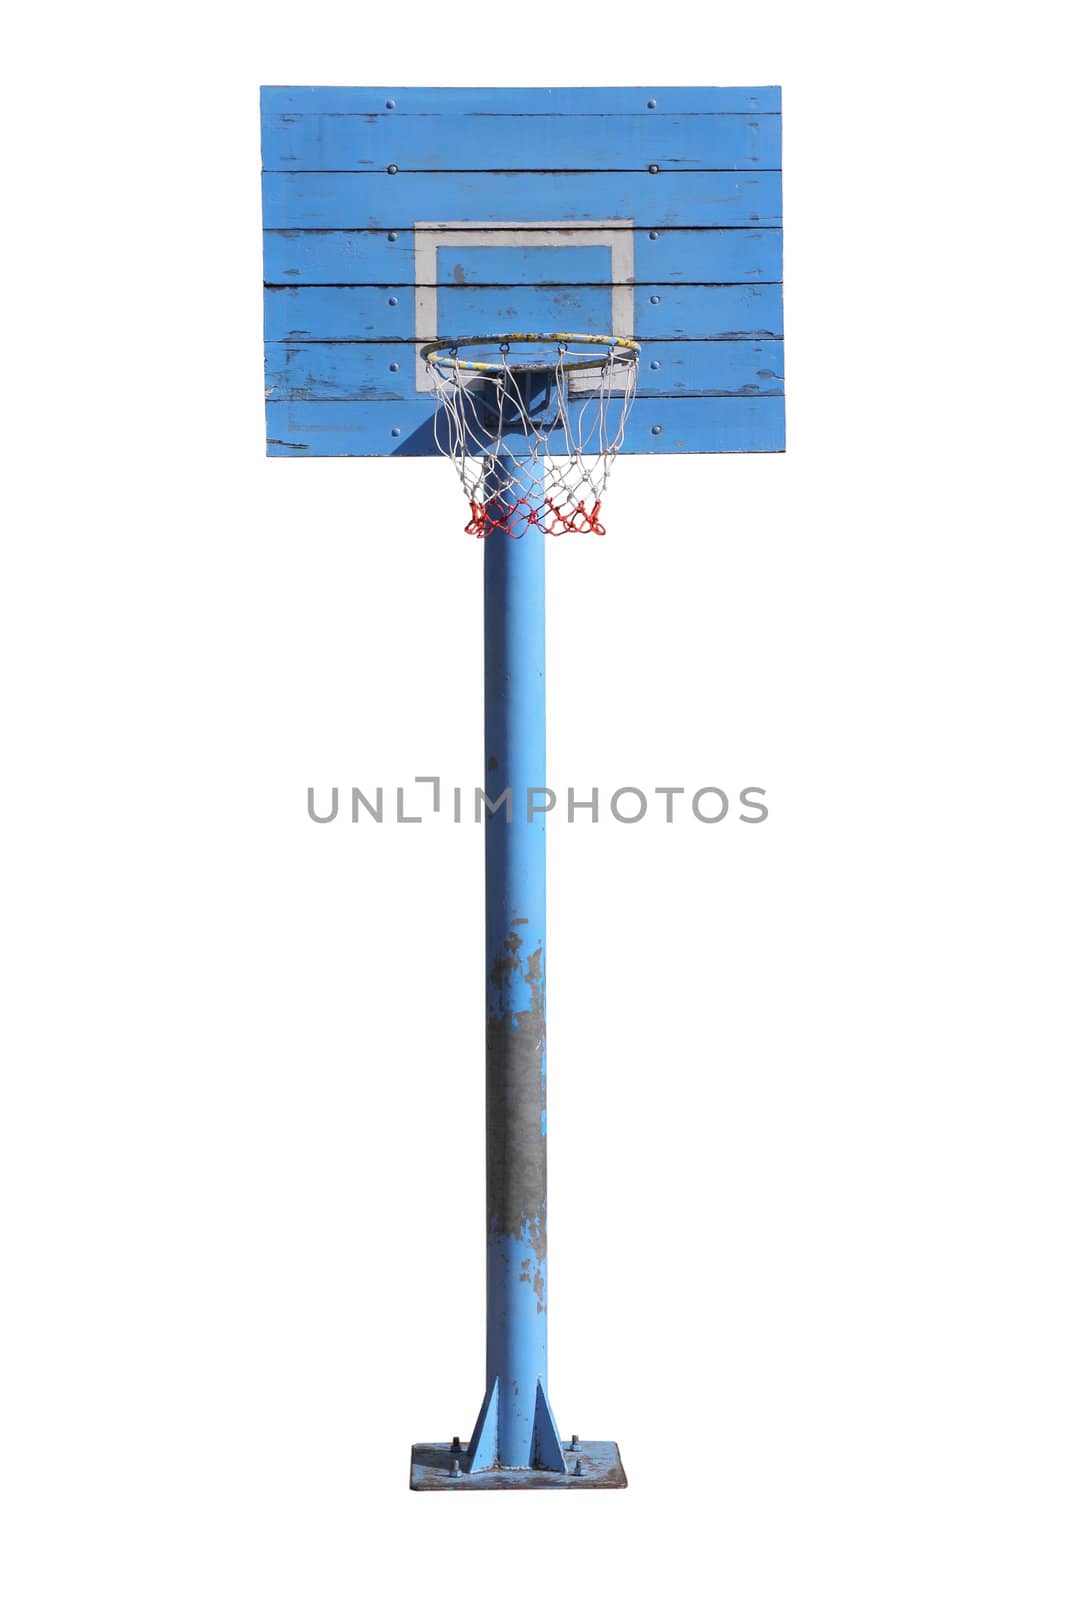 Outdoor basketball hoop by wyoosumran